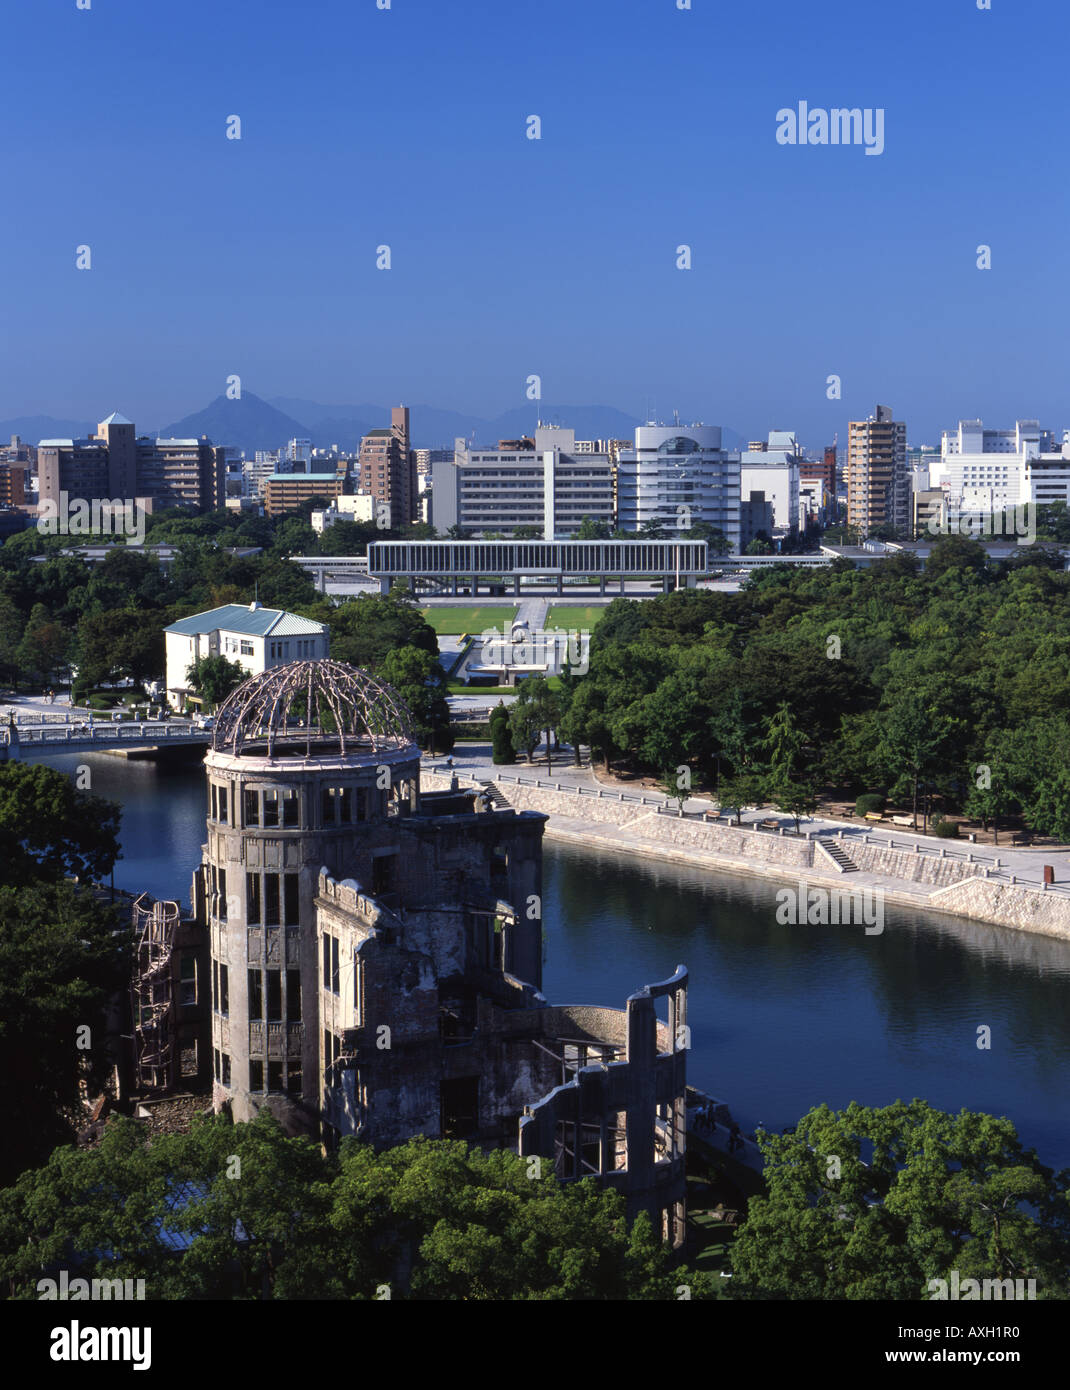 A-Bomb Dome ( Genbaku Dome ), Hiroshima, Japan.  A UNESCO World Heritage Site. Peace Memorial Park and Peace Memorial Museum. Stock Photo